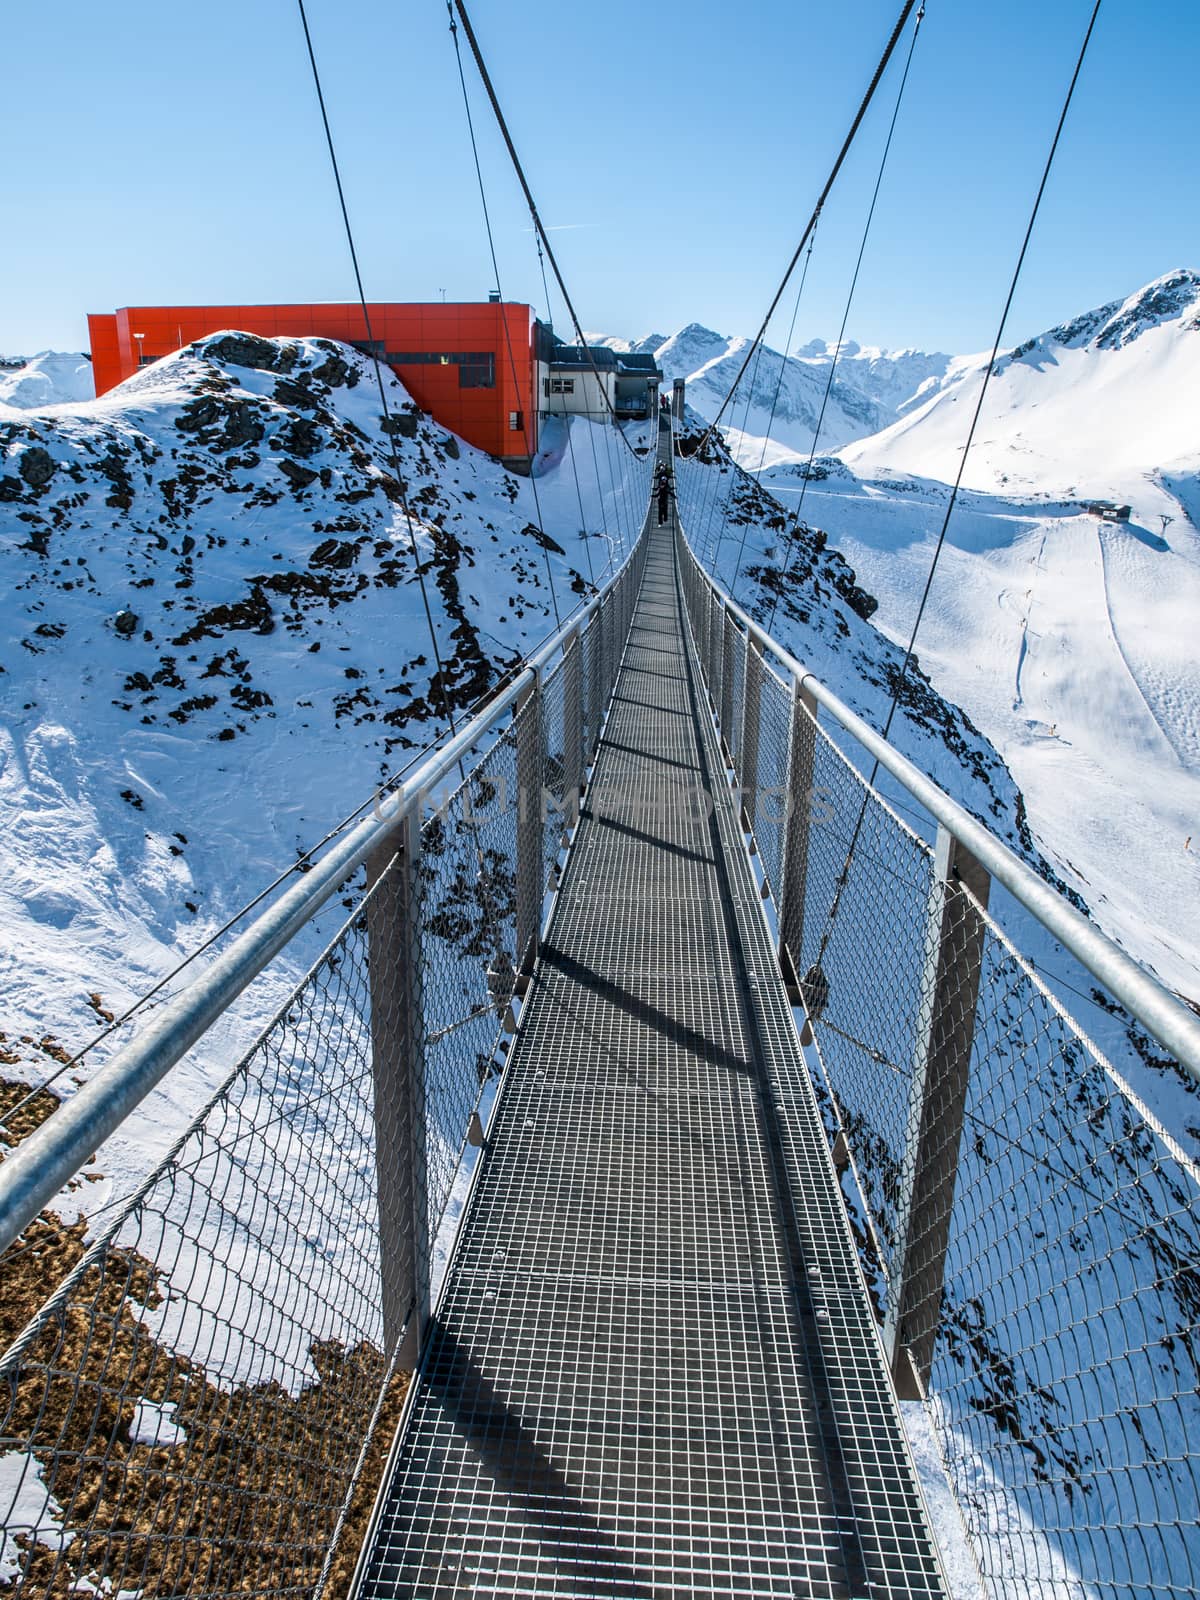 Hanging bridge in Gastein ski resort by pyty